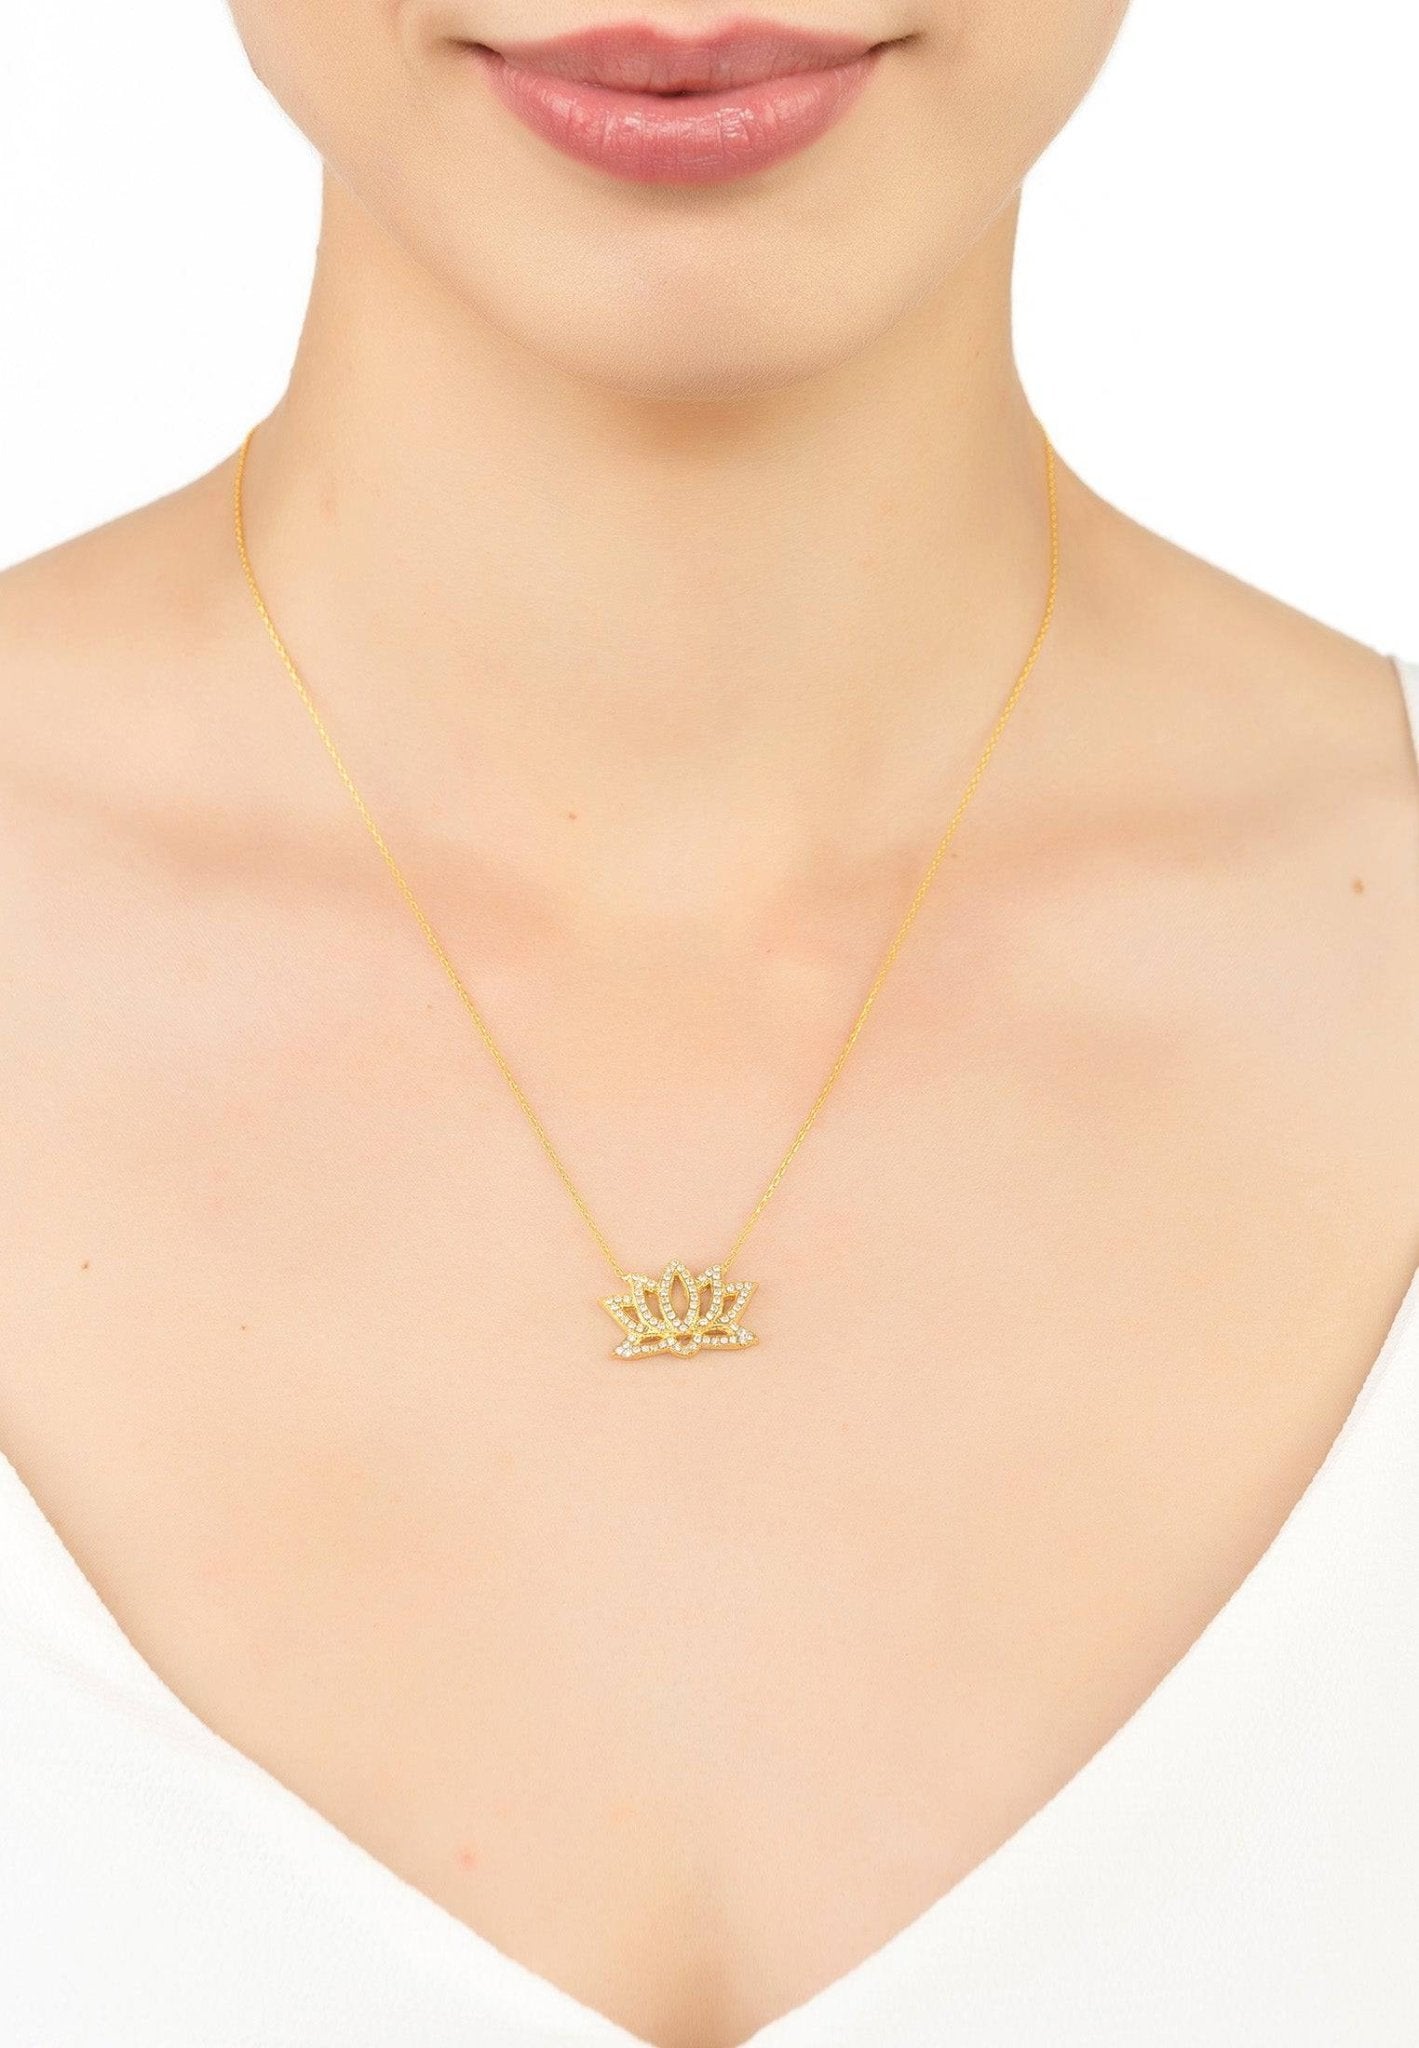 Lotus Flower Necklace Silver - LATELITA Necklaces